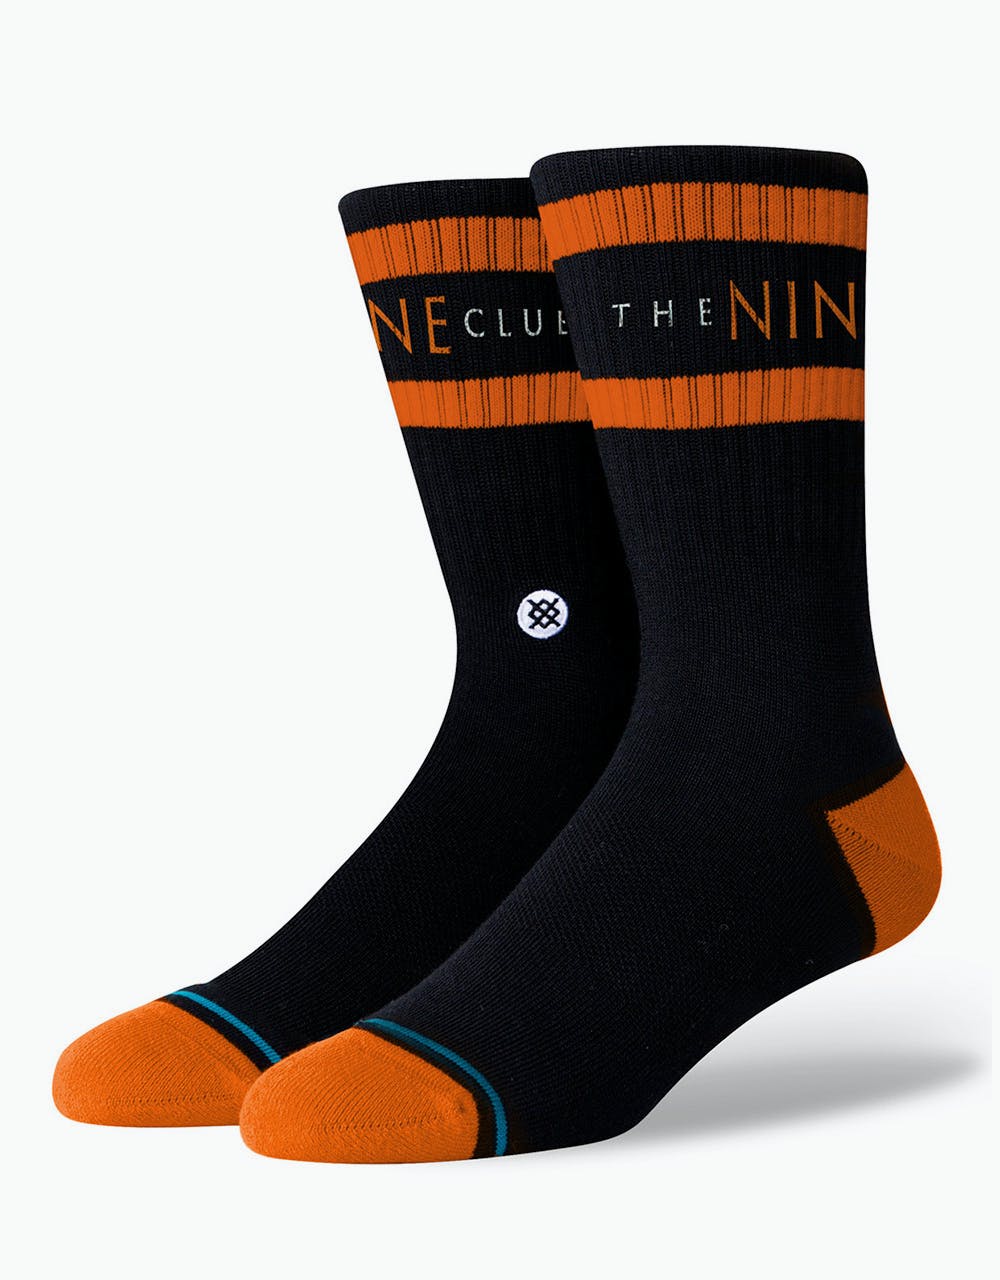 Stance x The Nine Club Classic Crew Socks - Black